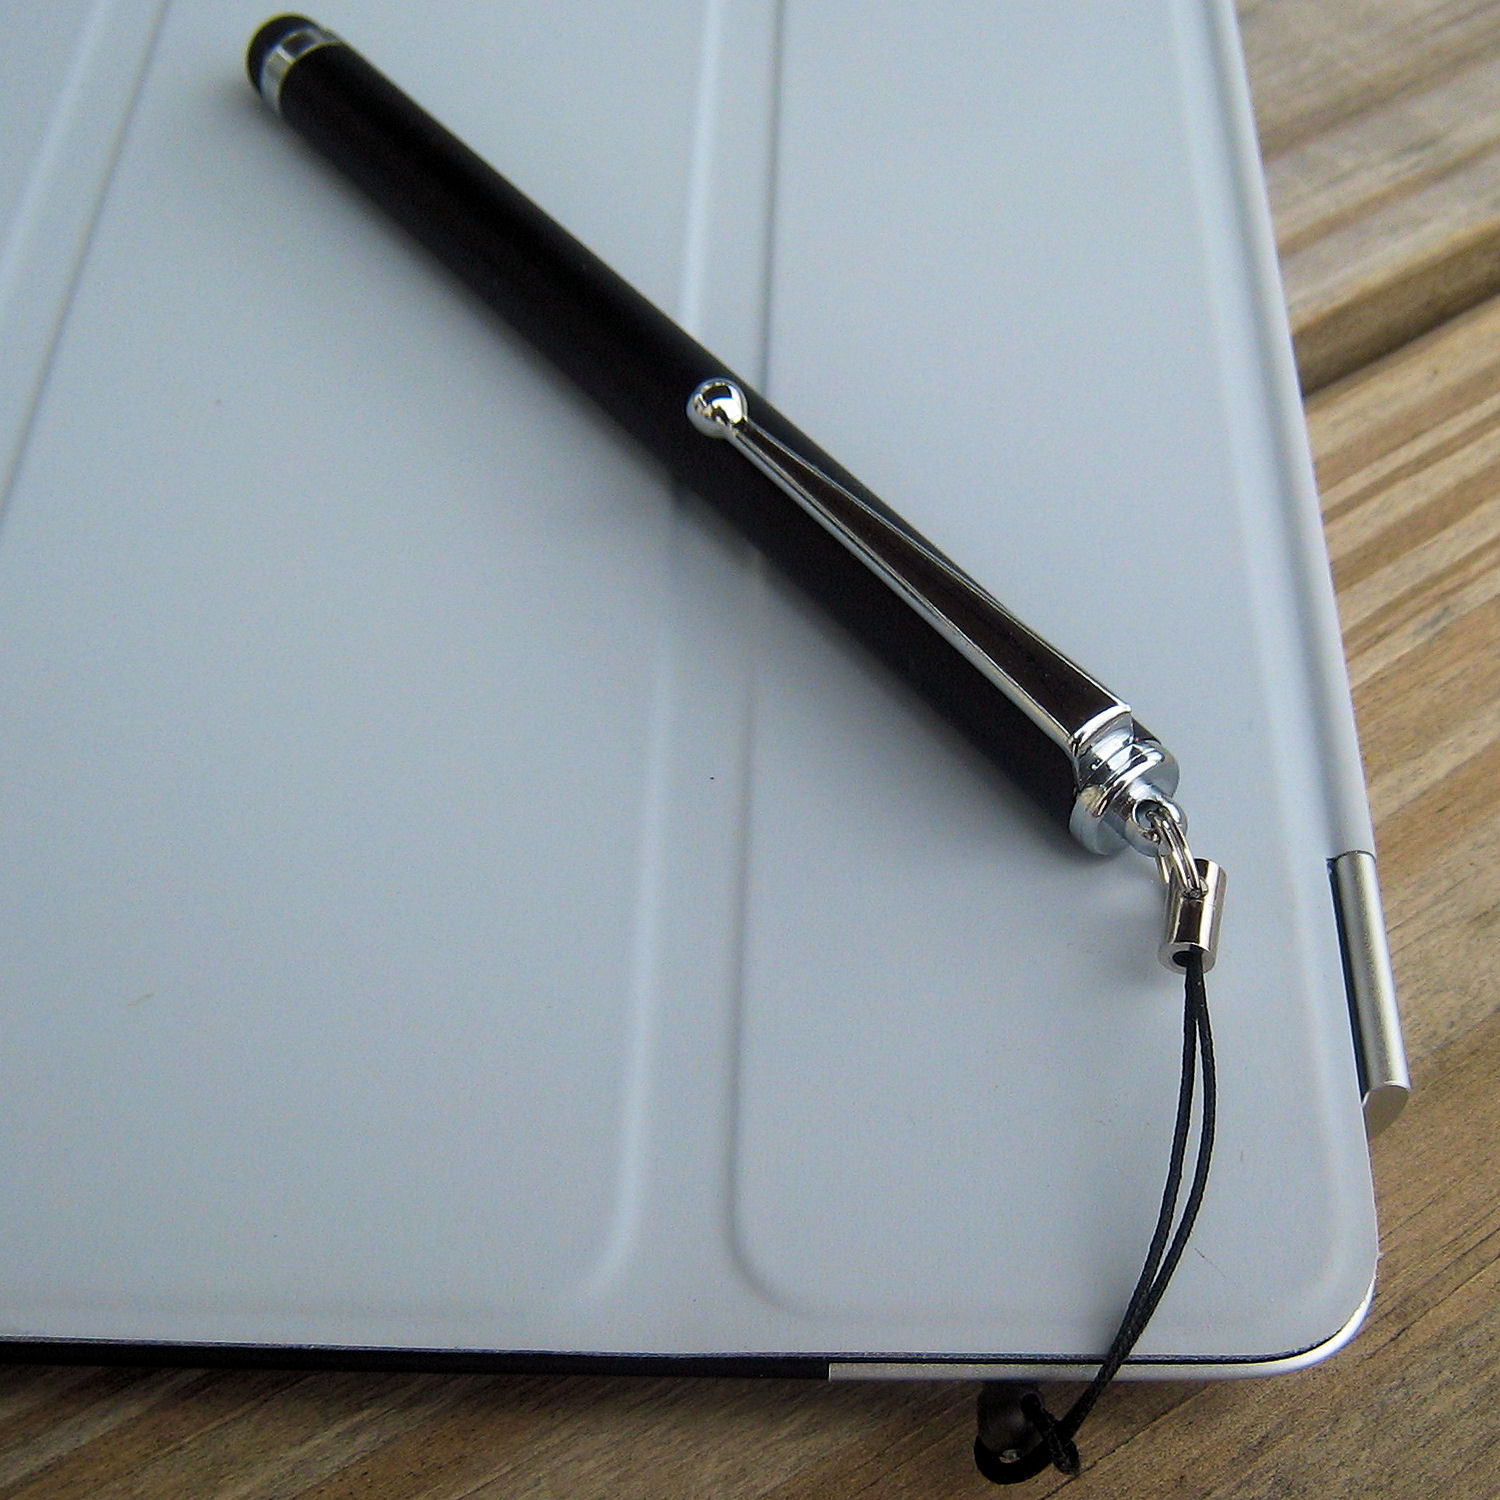 Gomadic Precision Tip Capacitive Stylus Pen designed for the LG Neon II (Black Color) - Lifetime Warranty